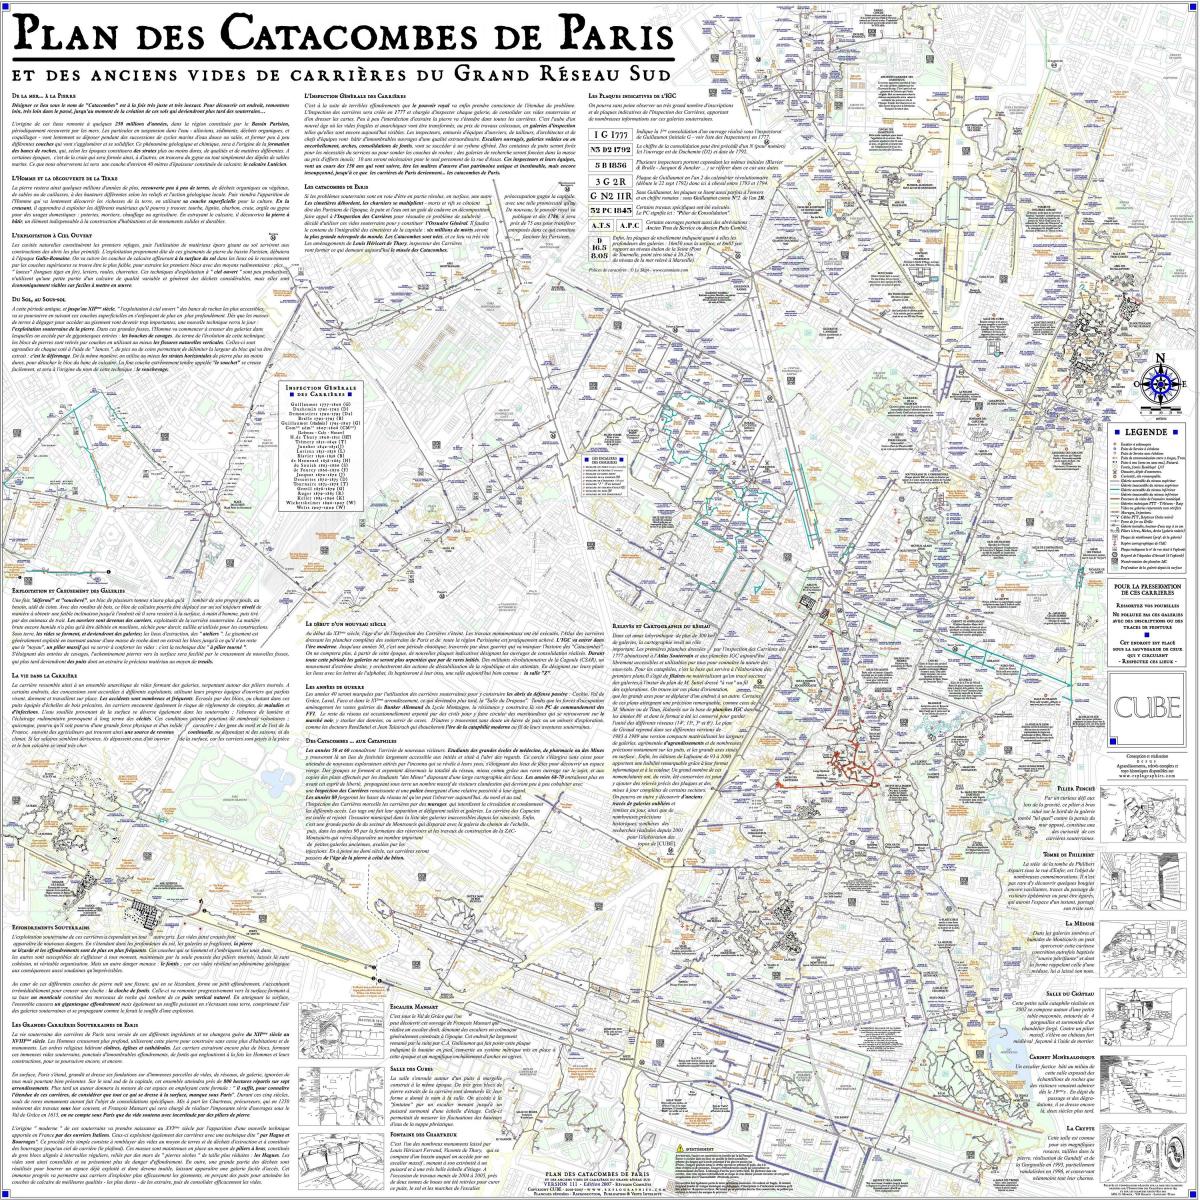 Карта Парижских катакомб